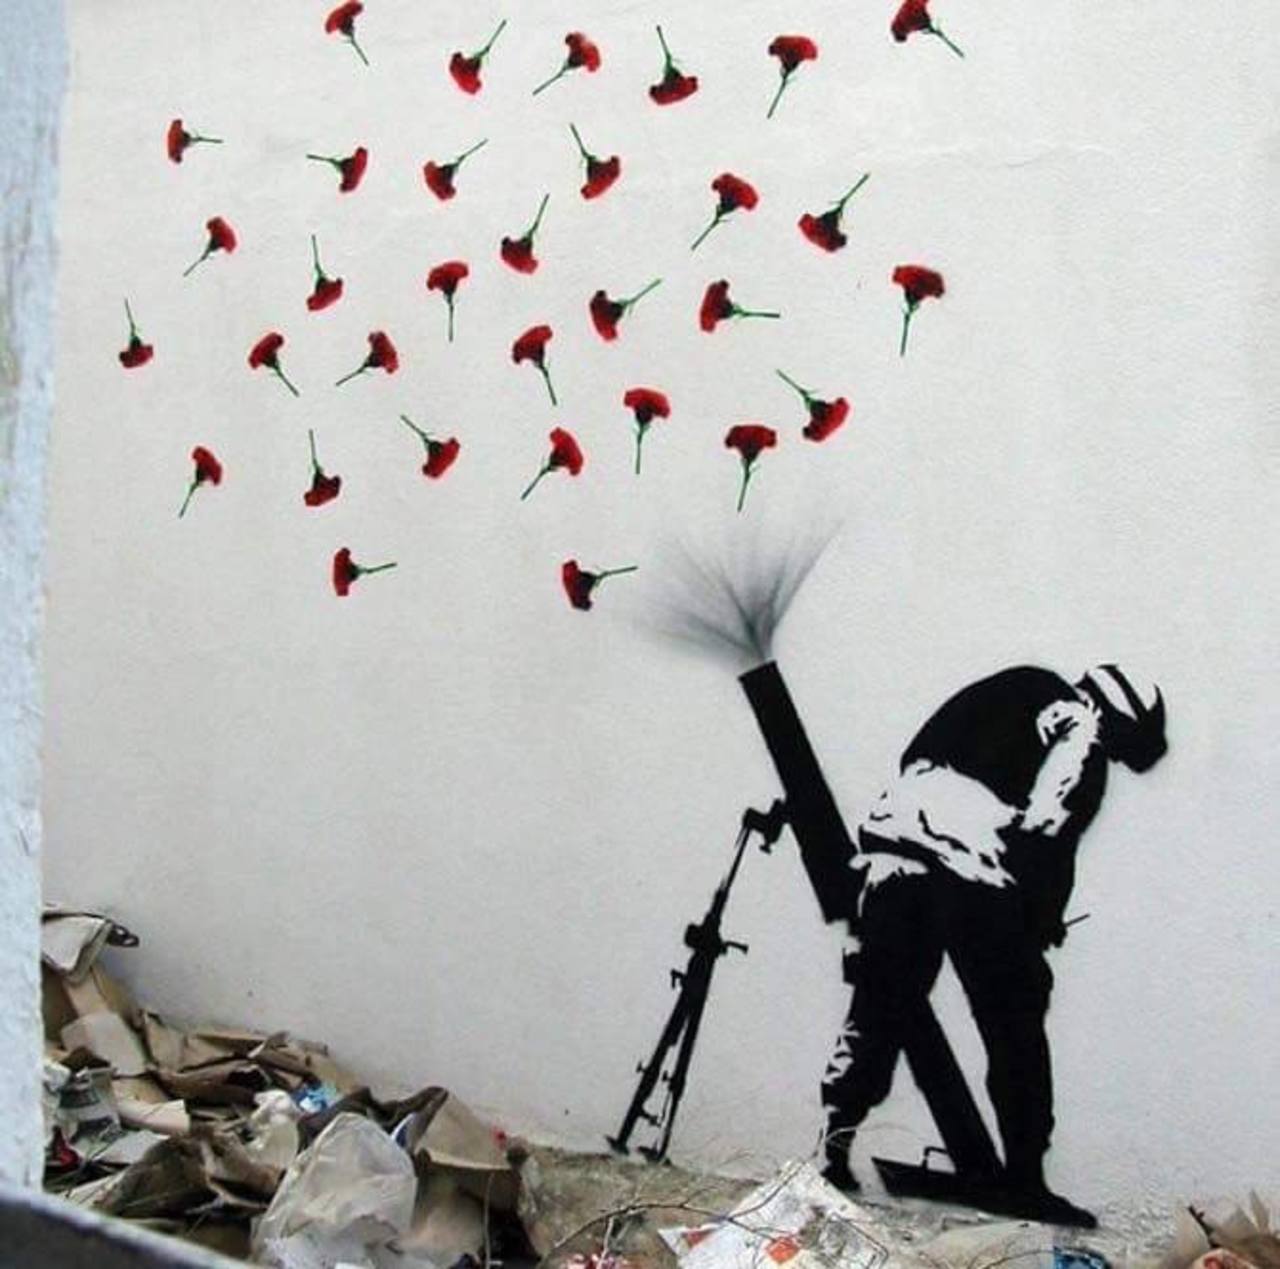 FLOWER BOMBS – #Creative #Streetart | Be ▲rtist - Be ▲rt https://beartistbeart.com/2016/08/17/flower-bombs-creative-streetart/?utm_campaign=crowdfire&utm_content=crowdfire&utm_medium=social&utm_source=twitter https://t.co/ySBGIMWewg